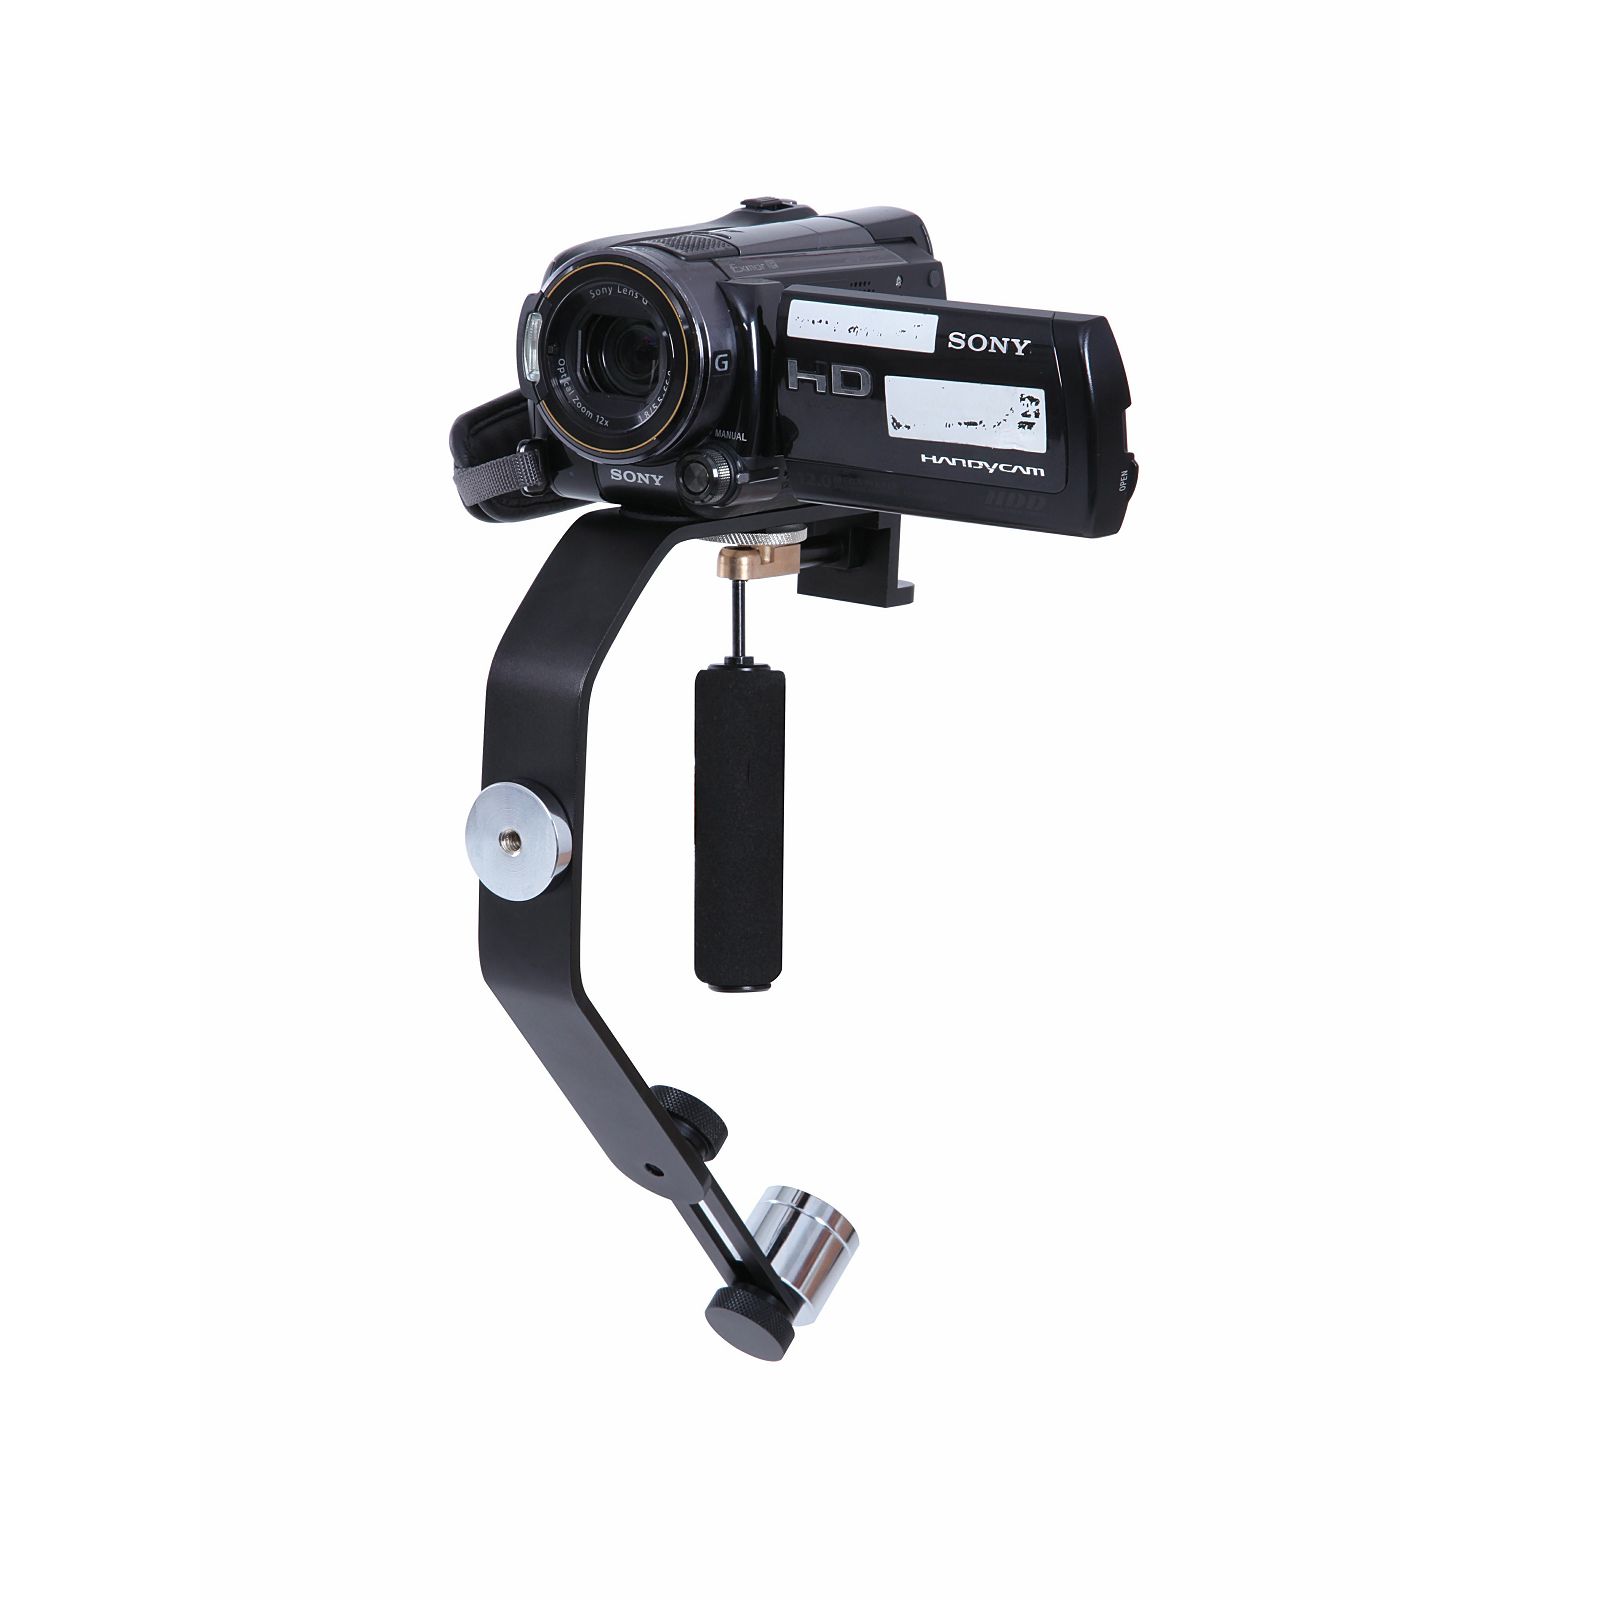 Sevenoak Mini Camera Stabilizer SK-W08 SteadyCam stabilizator fotoaparata i kamere do 0,5kg za video snimanje s utegom